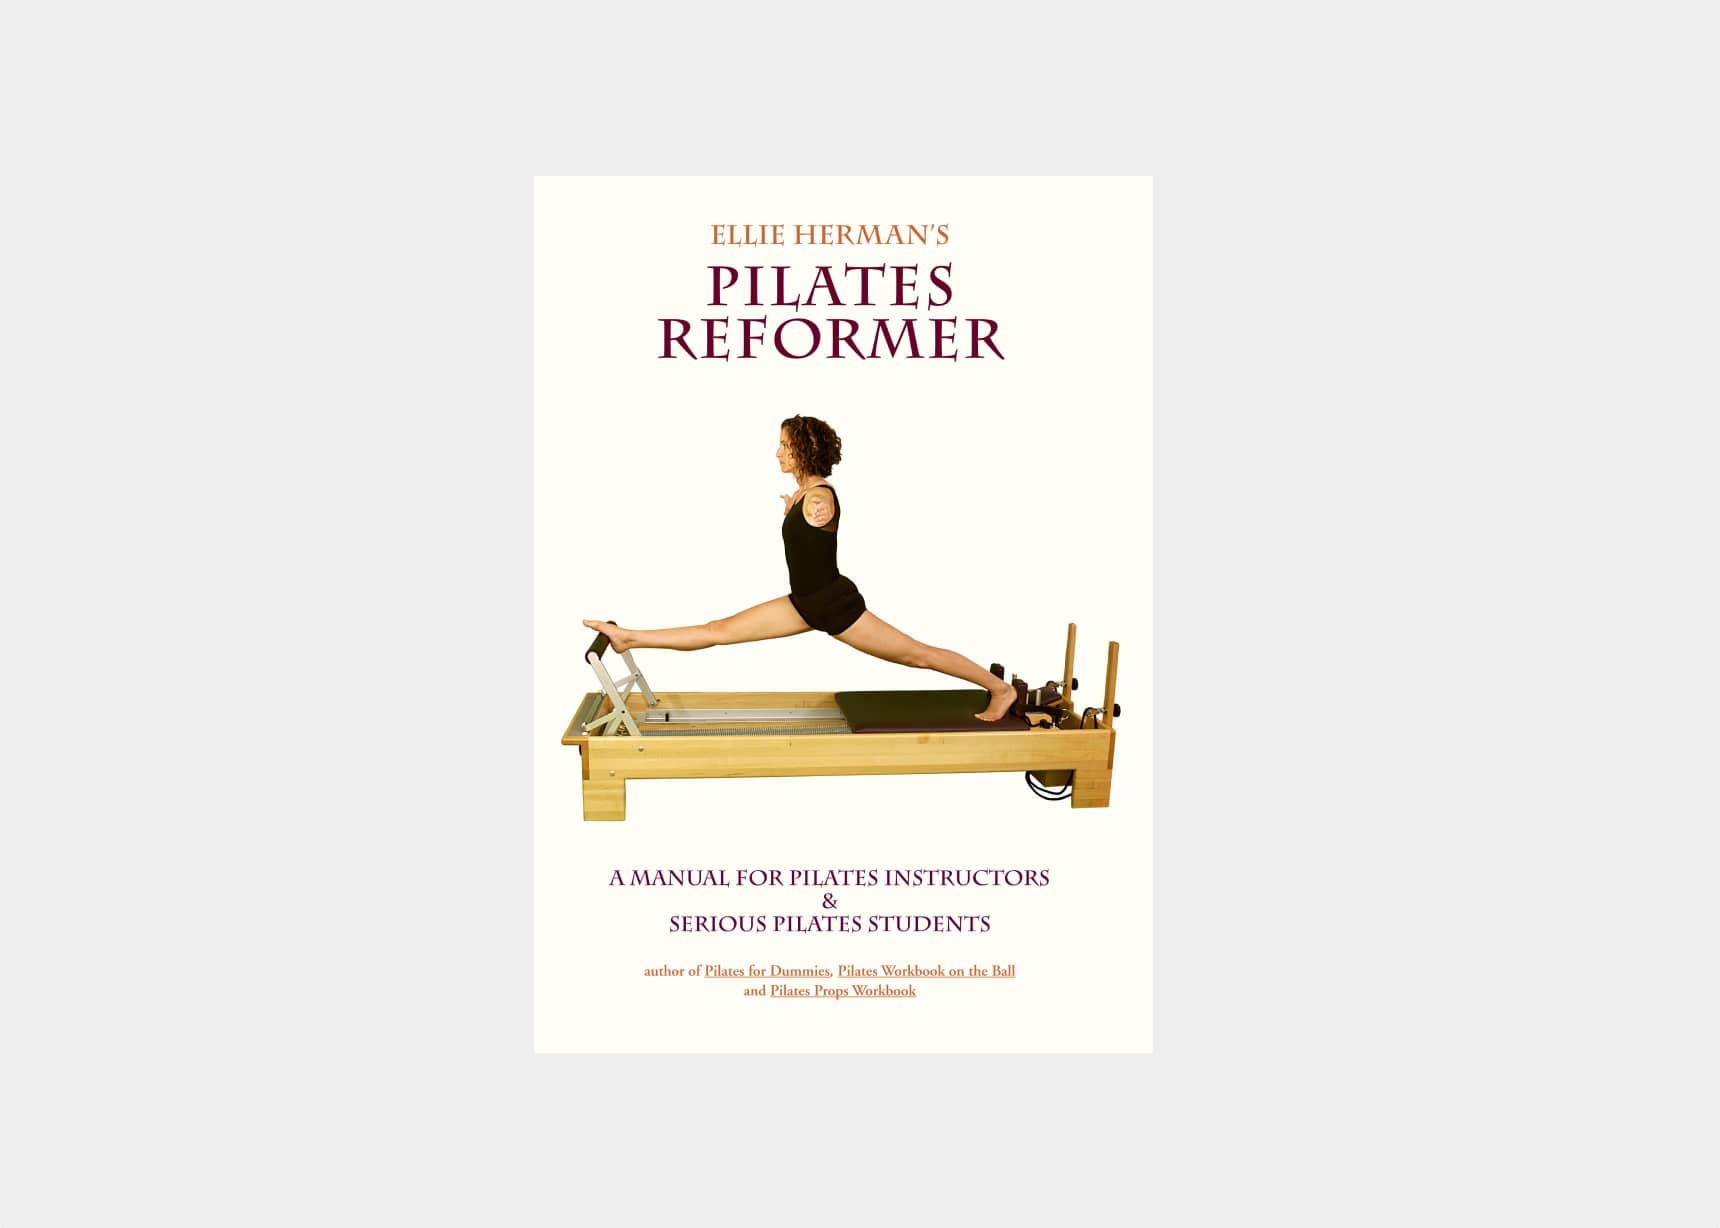 Pilates Reformer, a manual for pilates instructions